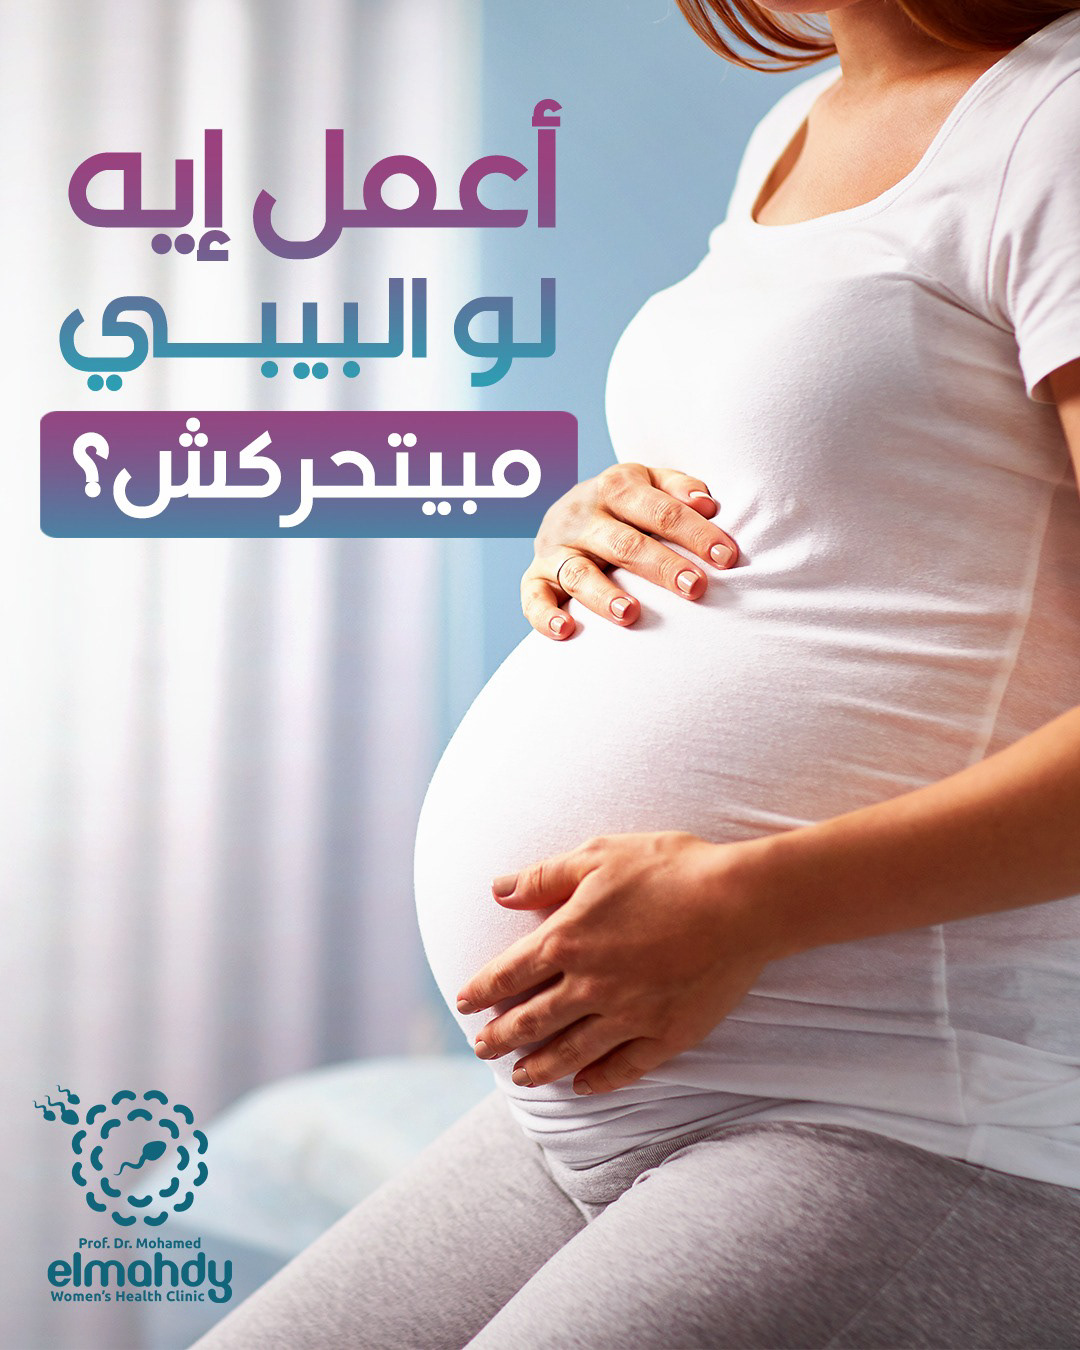 gynaecologist medical advertising medical social media pregnancy pregnant